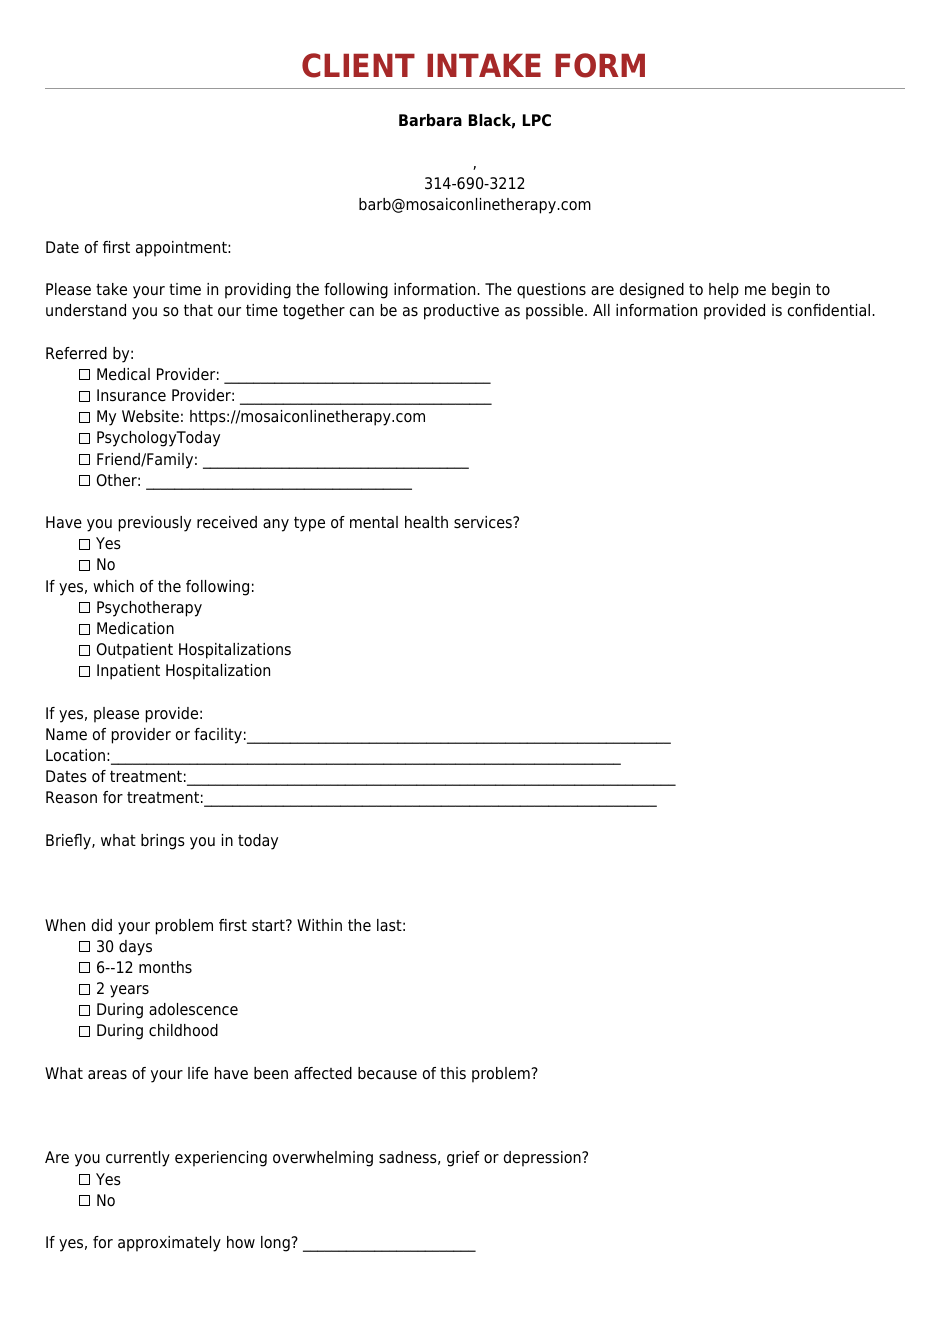 Client Intake Form - Barbara Black, Page 1